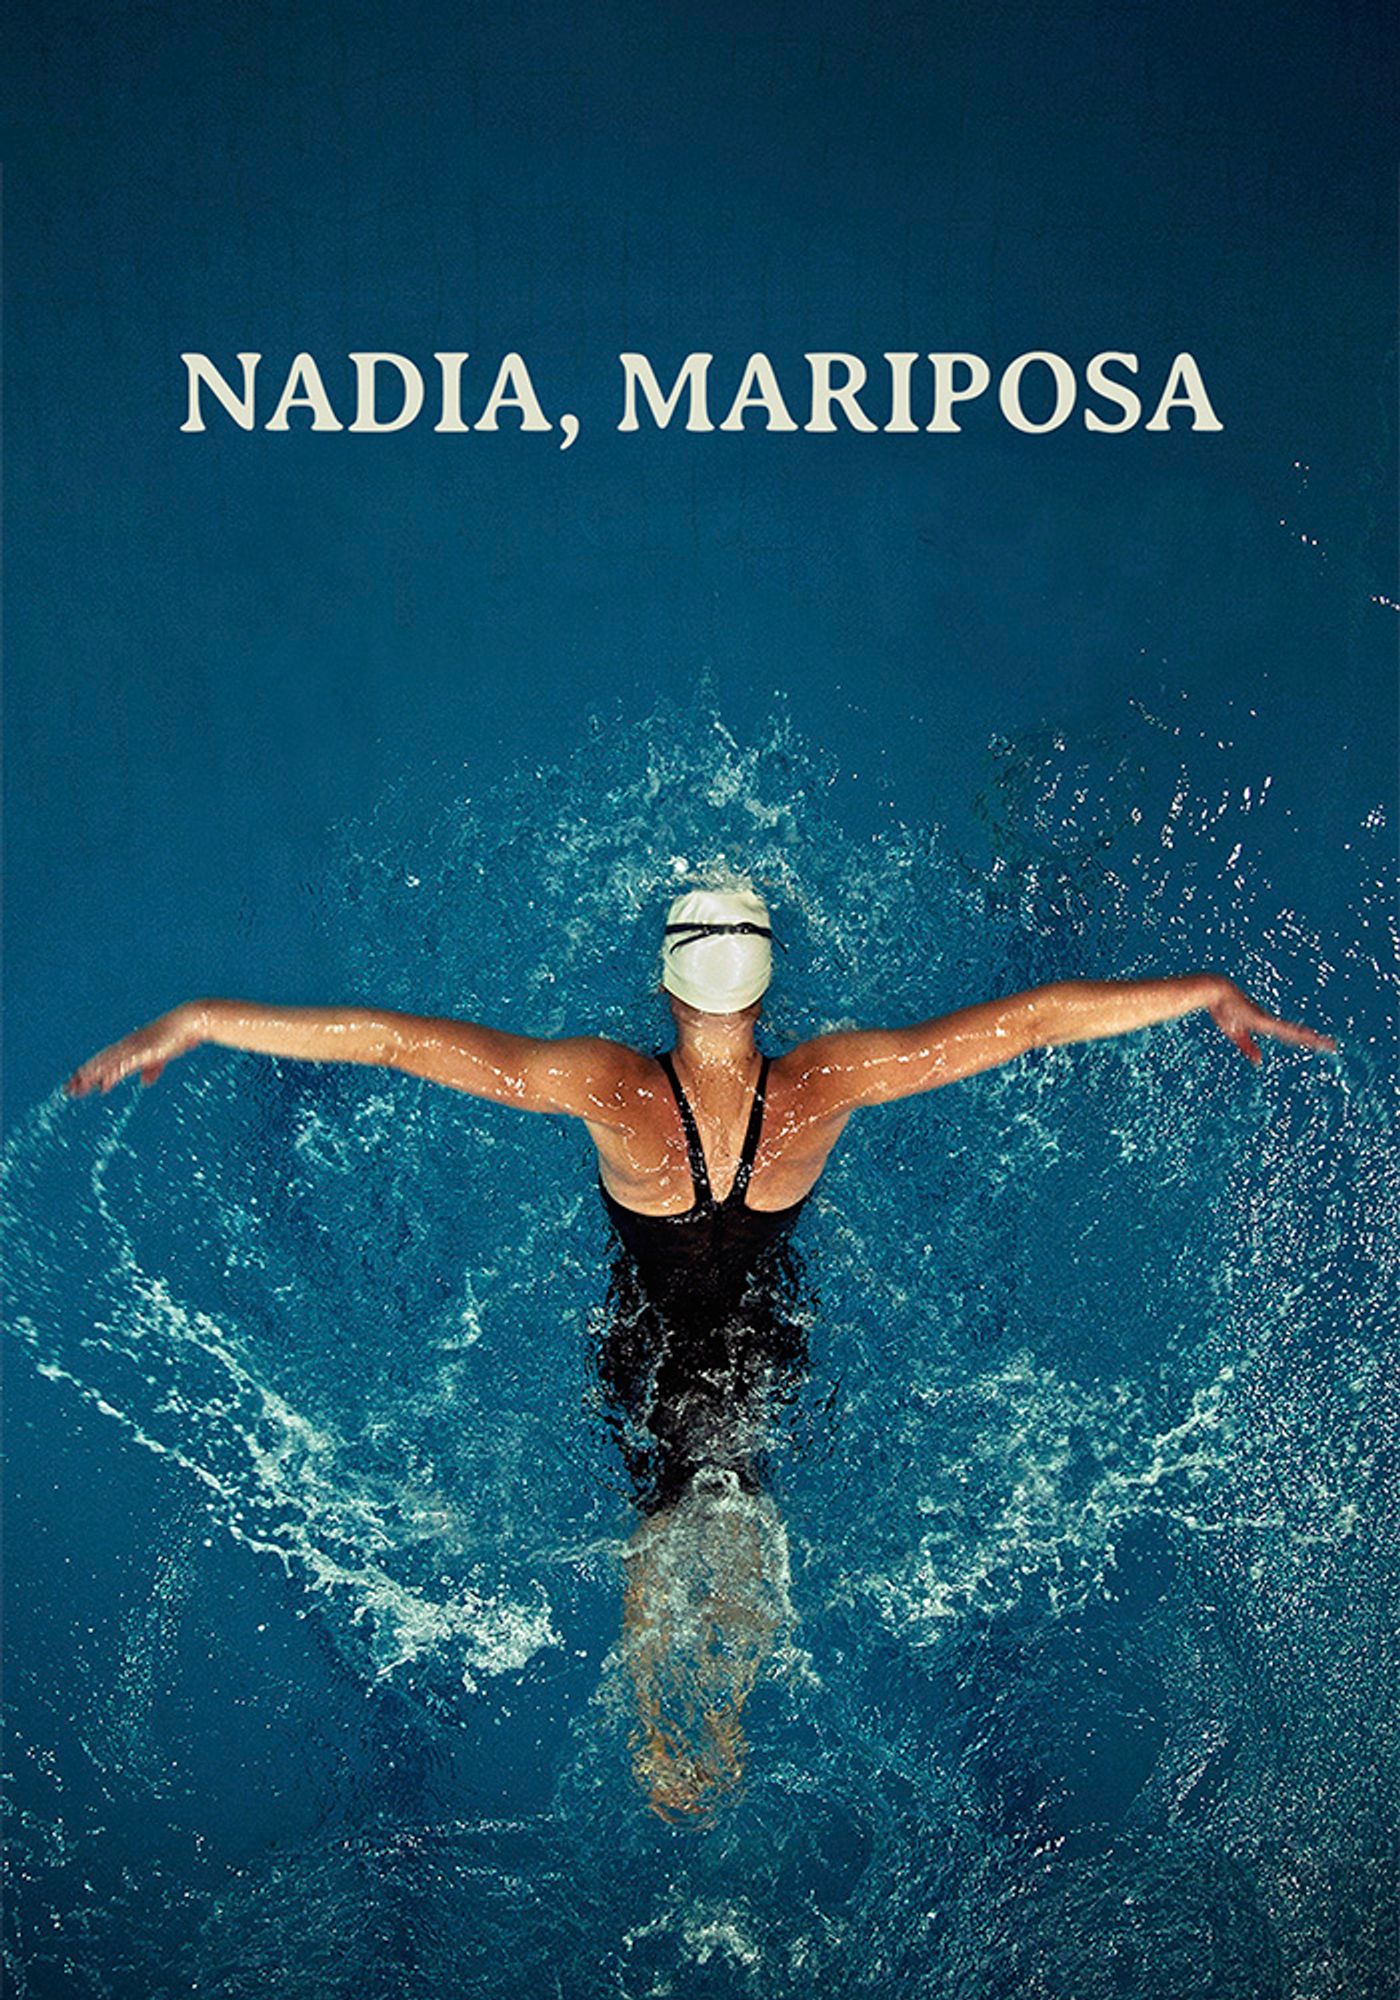 NadiaMariposa 700x1000 MITELE